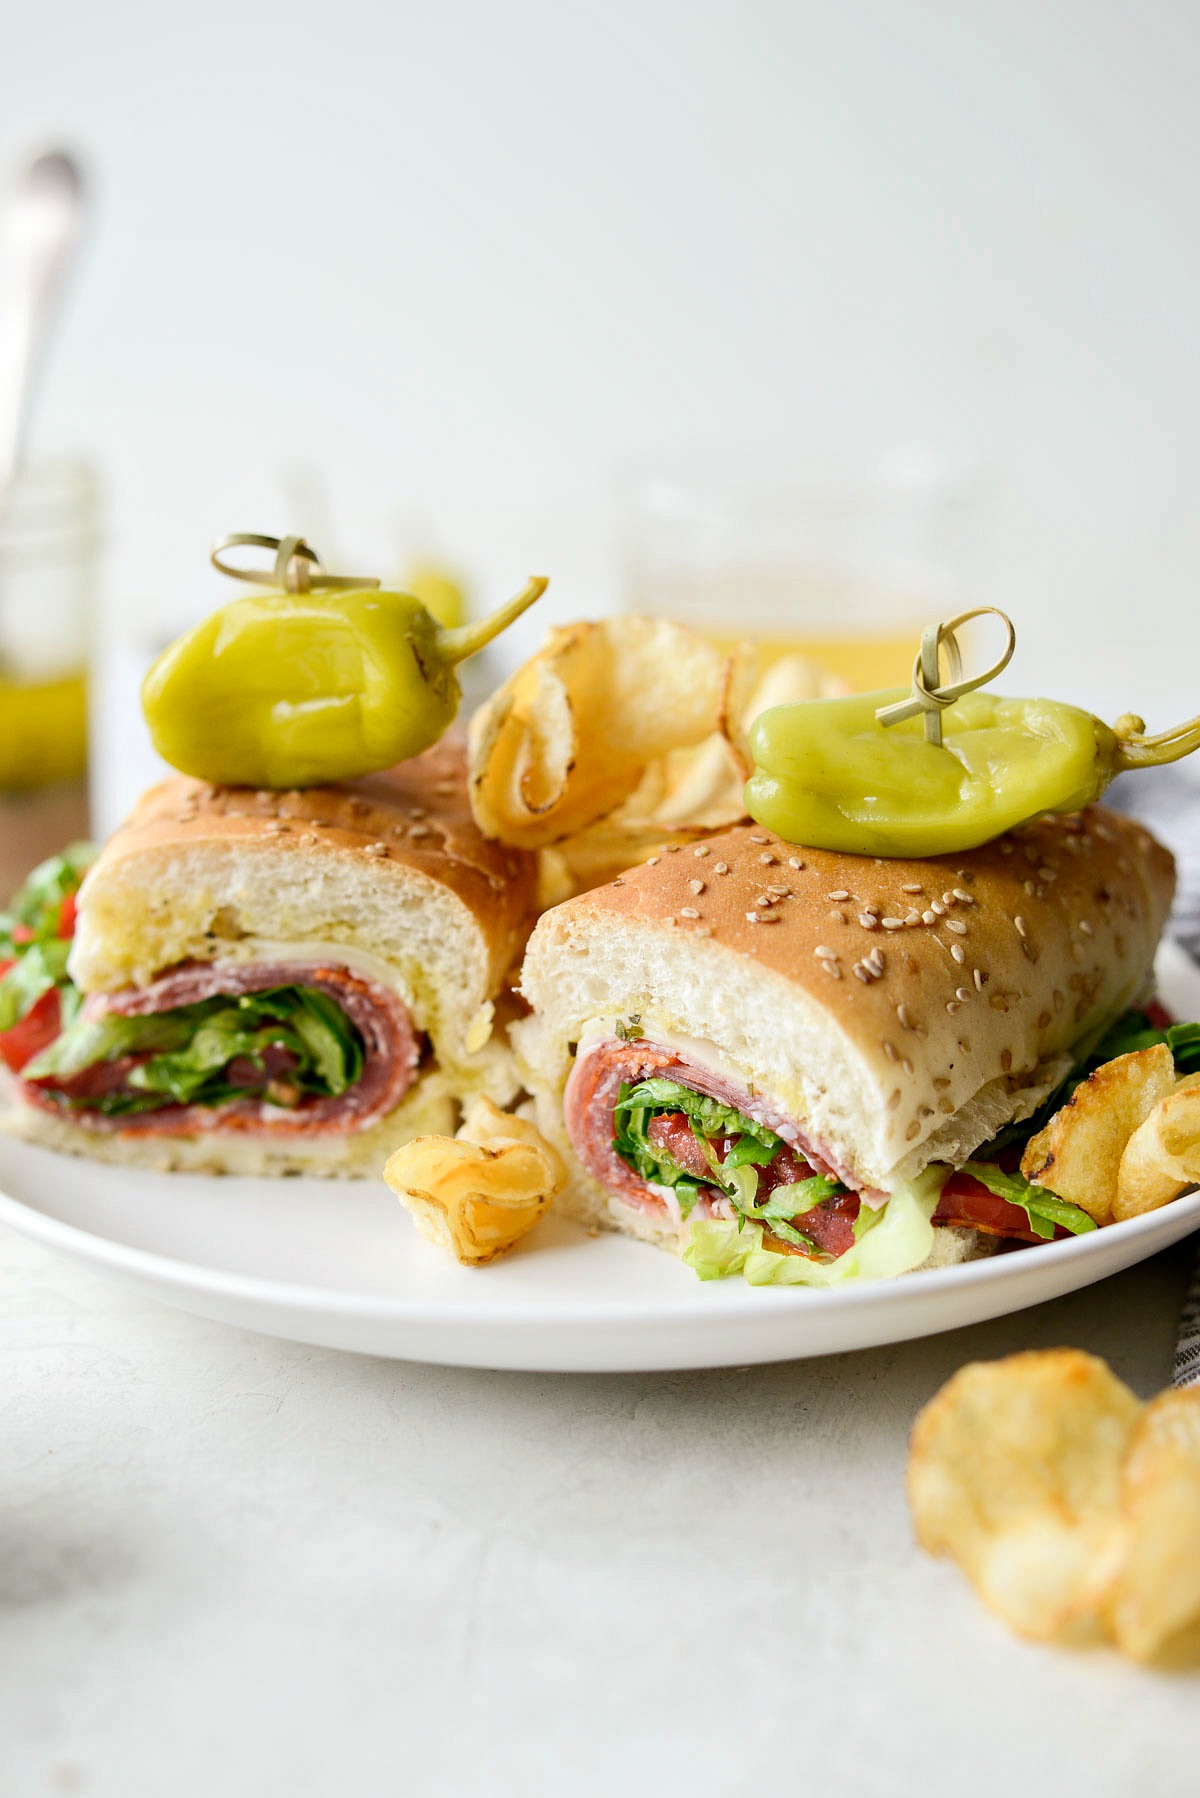 Italian Sub Sandwiches - Simply Scratch